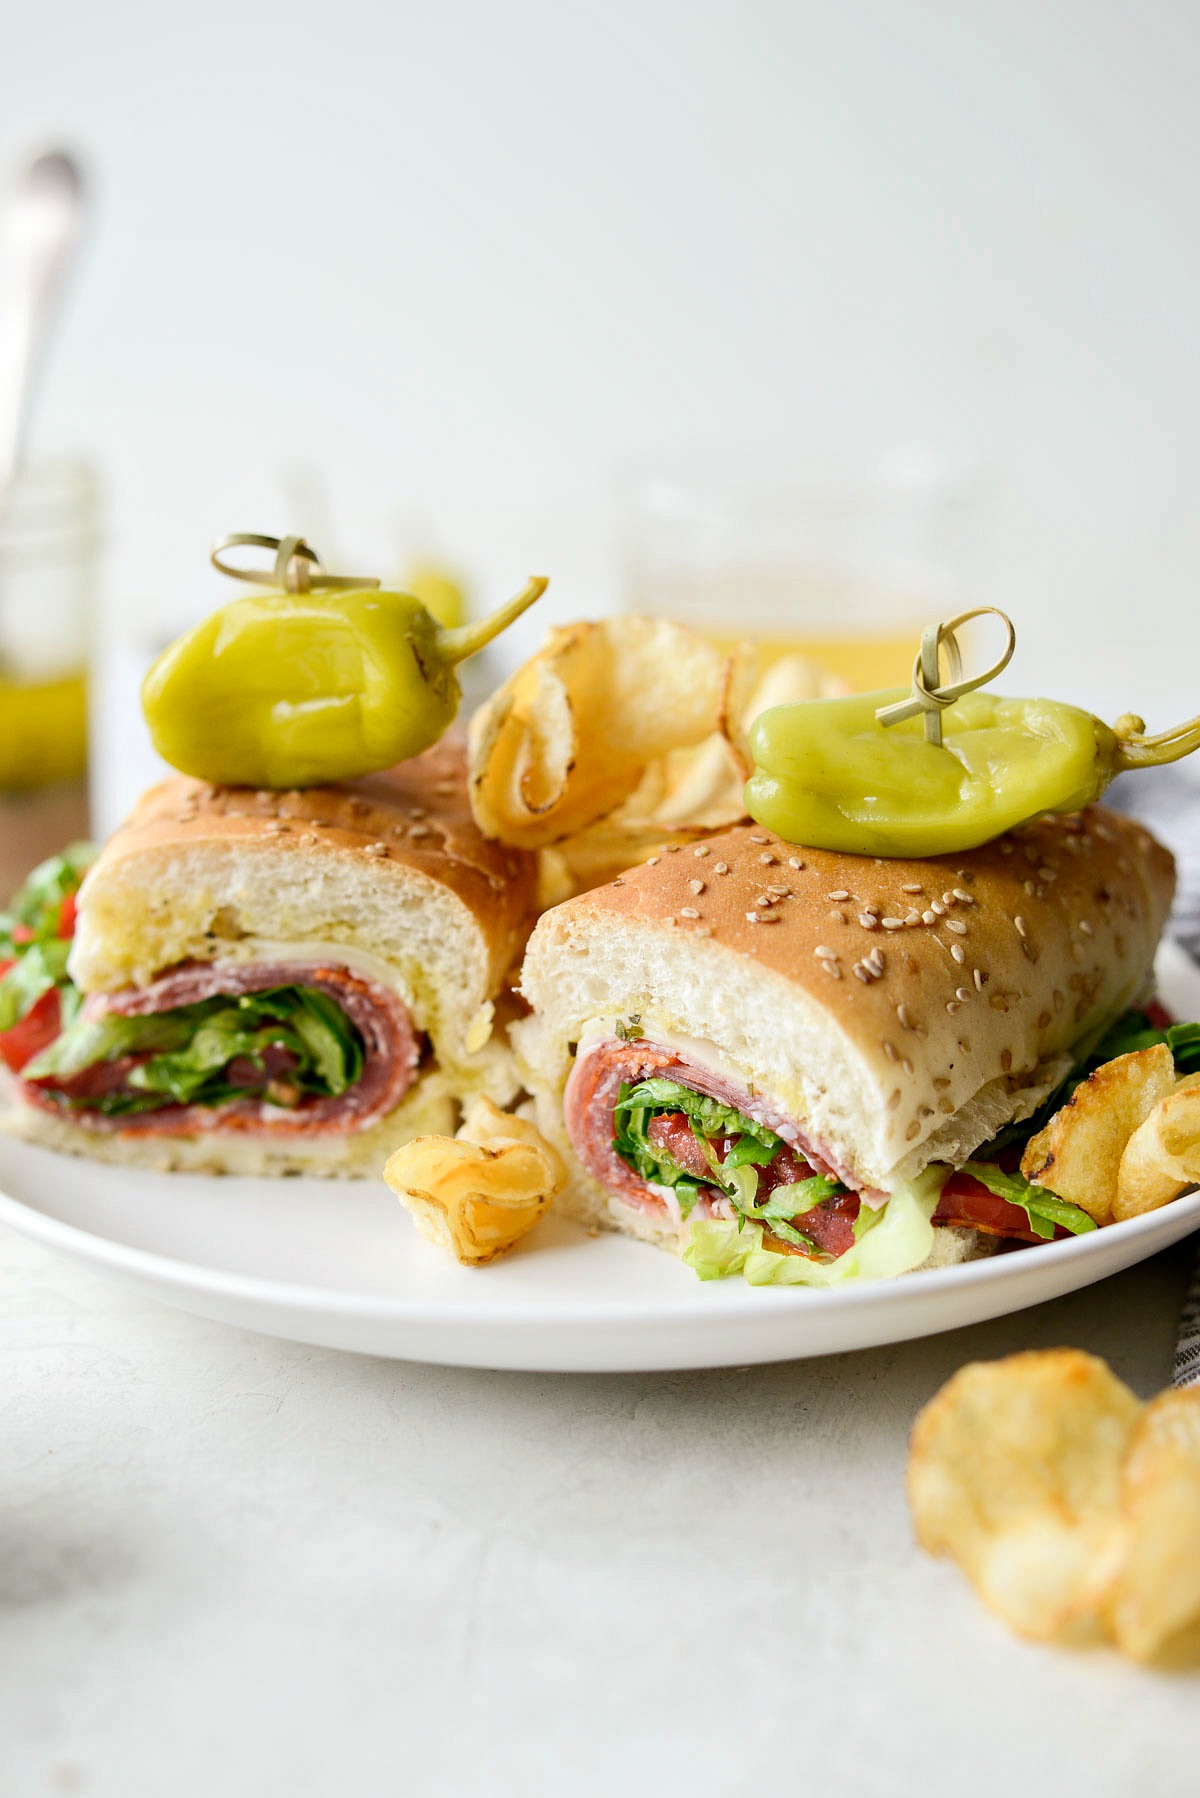 Italian Sub Sandwiches - Simply Scratch